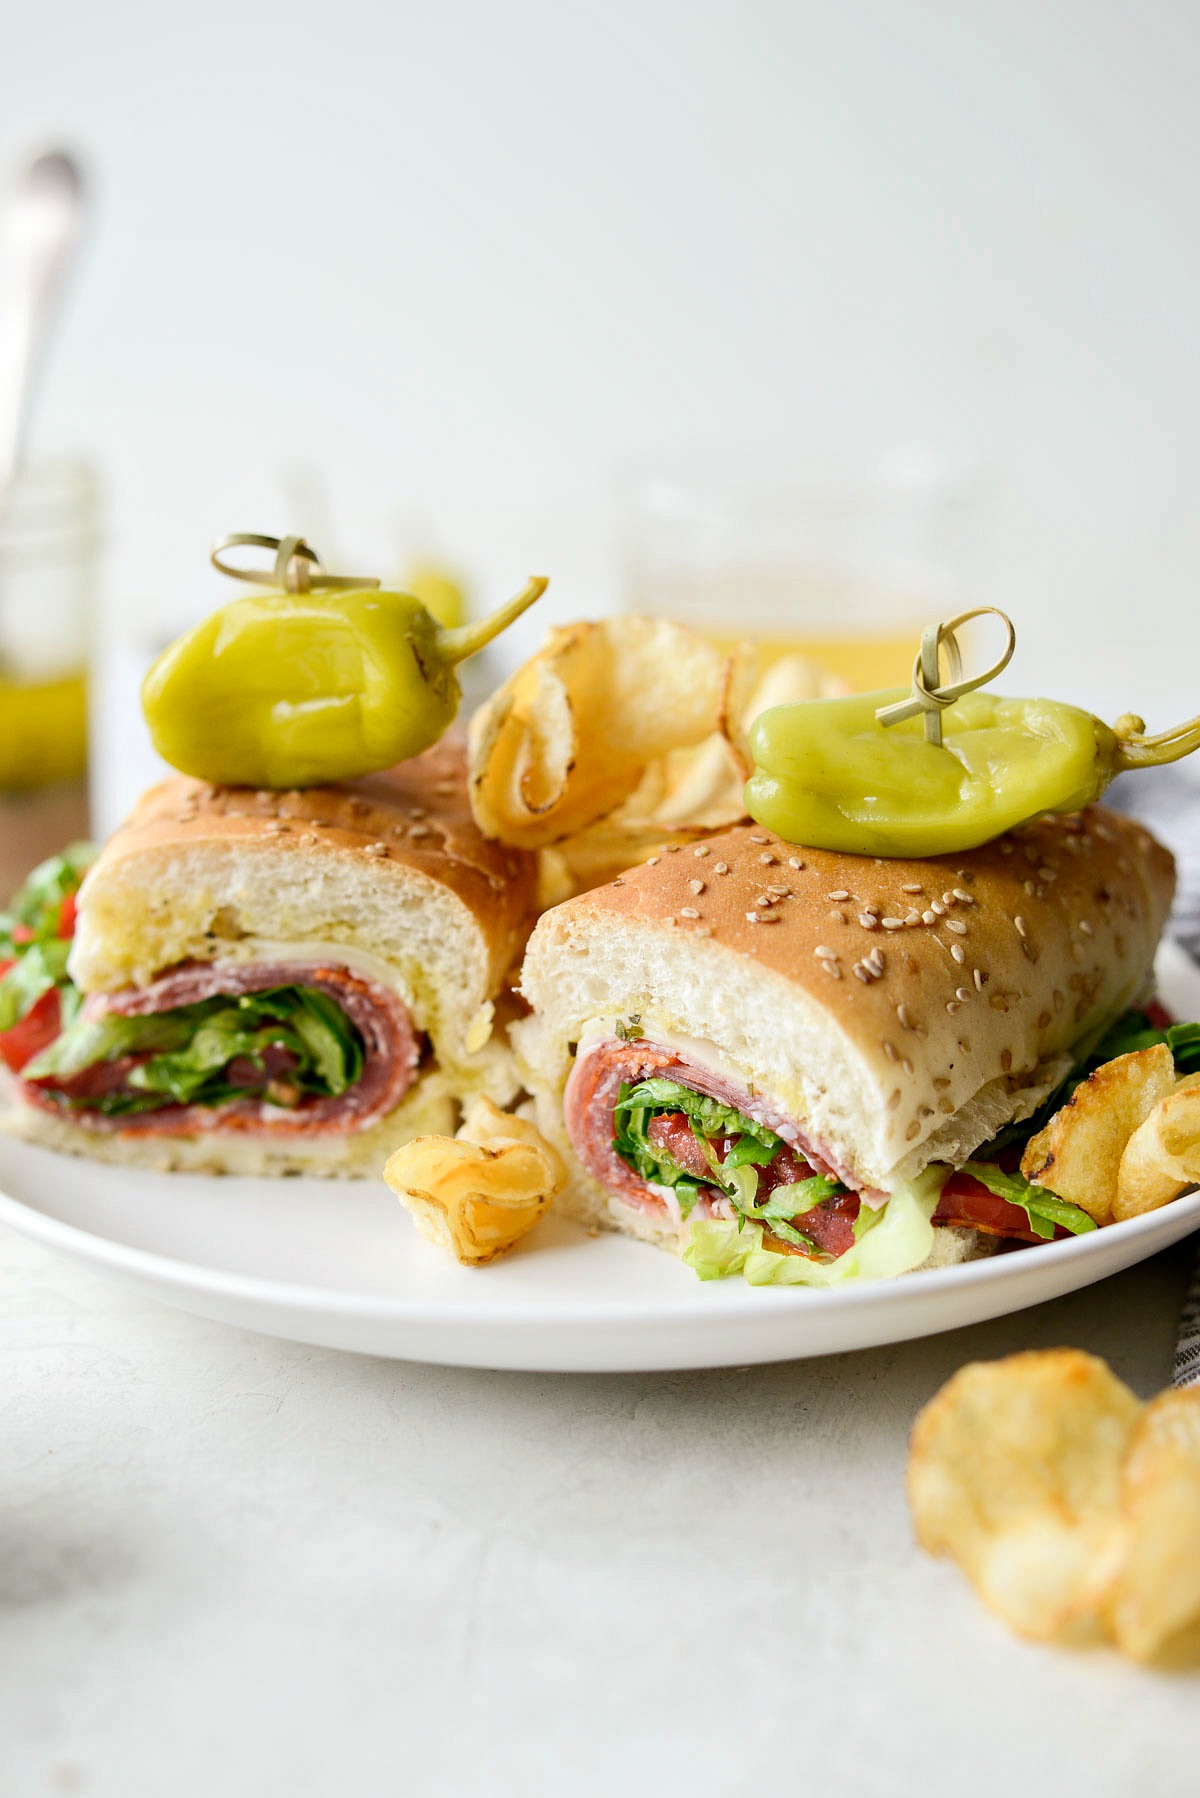 Italian Sub Sandwiches - Simply Scratch